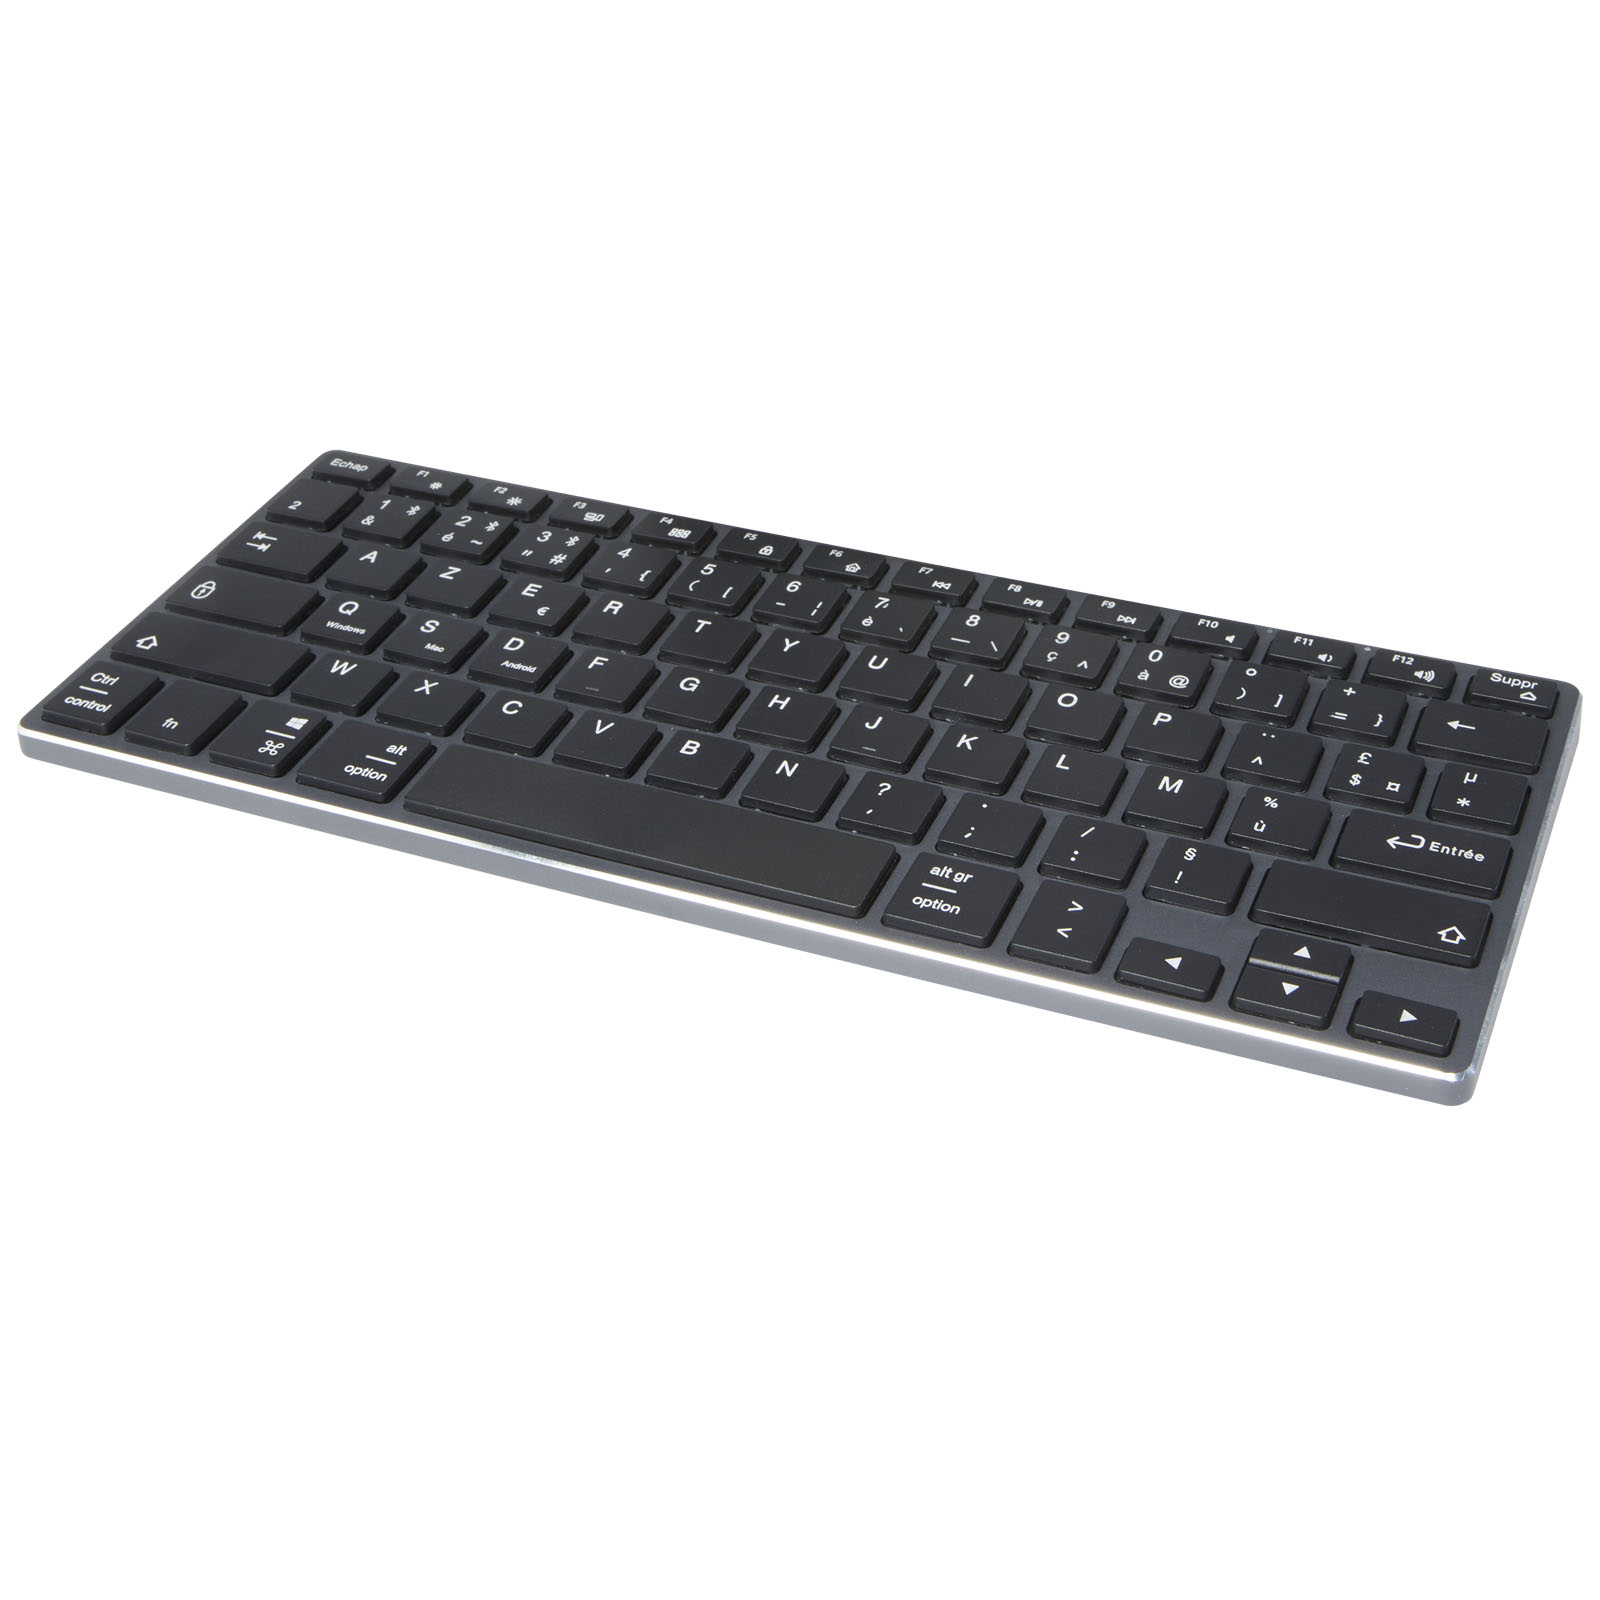 Technology - Hybrid performance Bluetooth keyboard - AZERTY